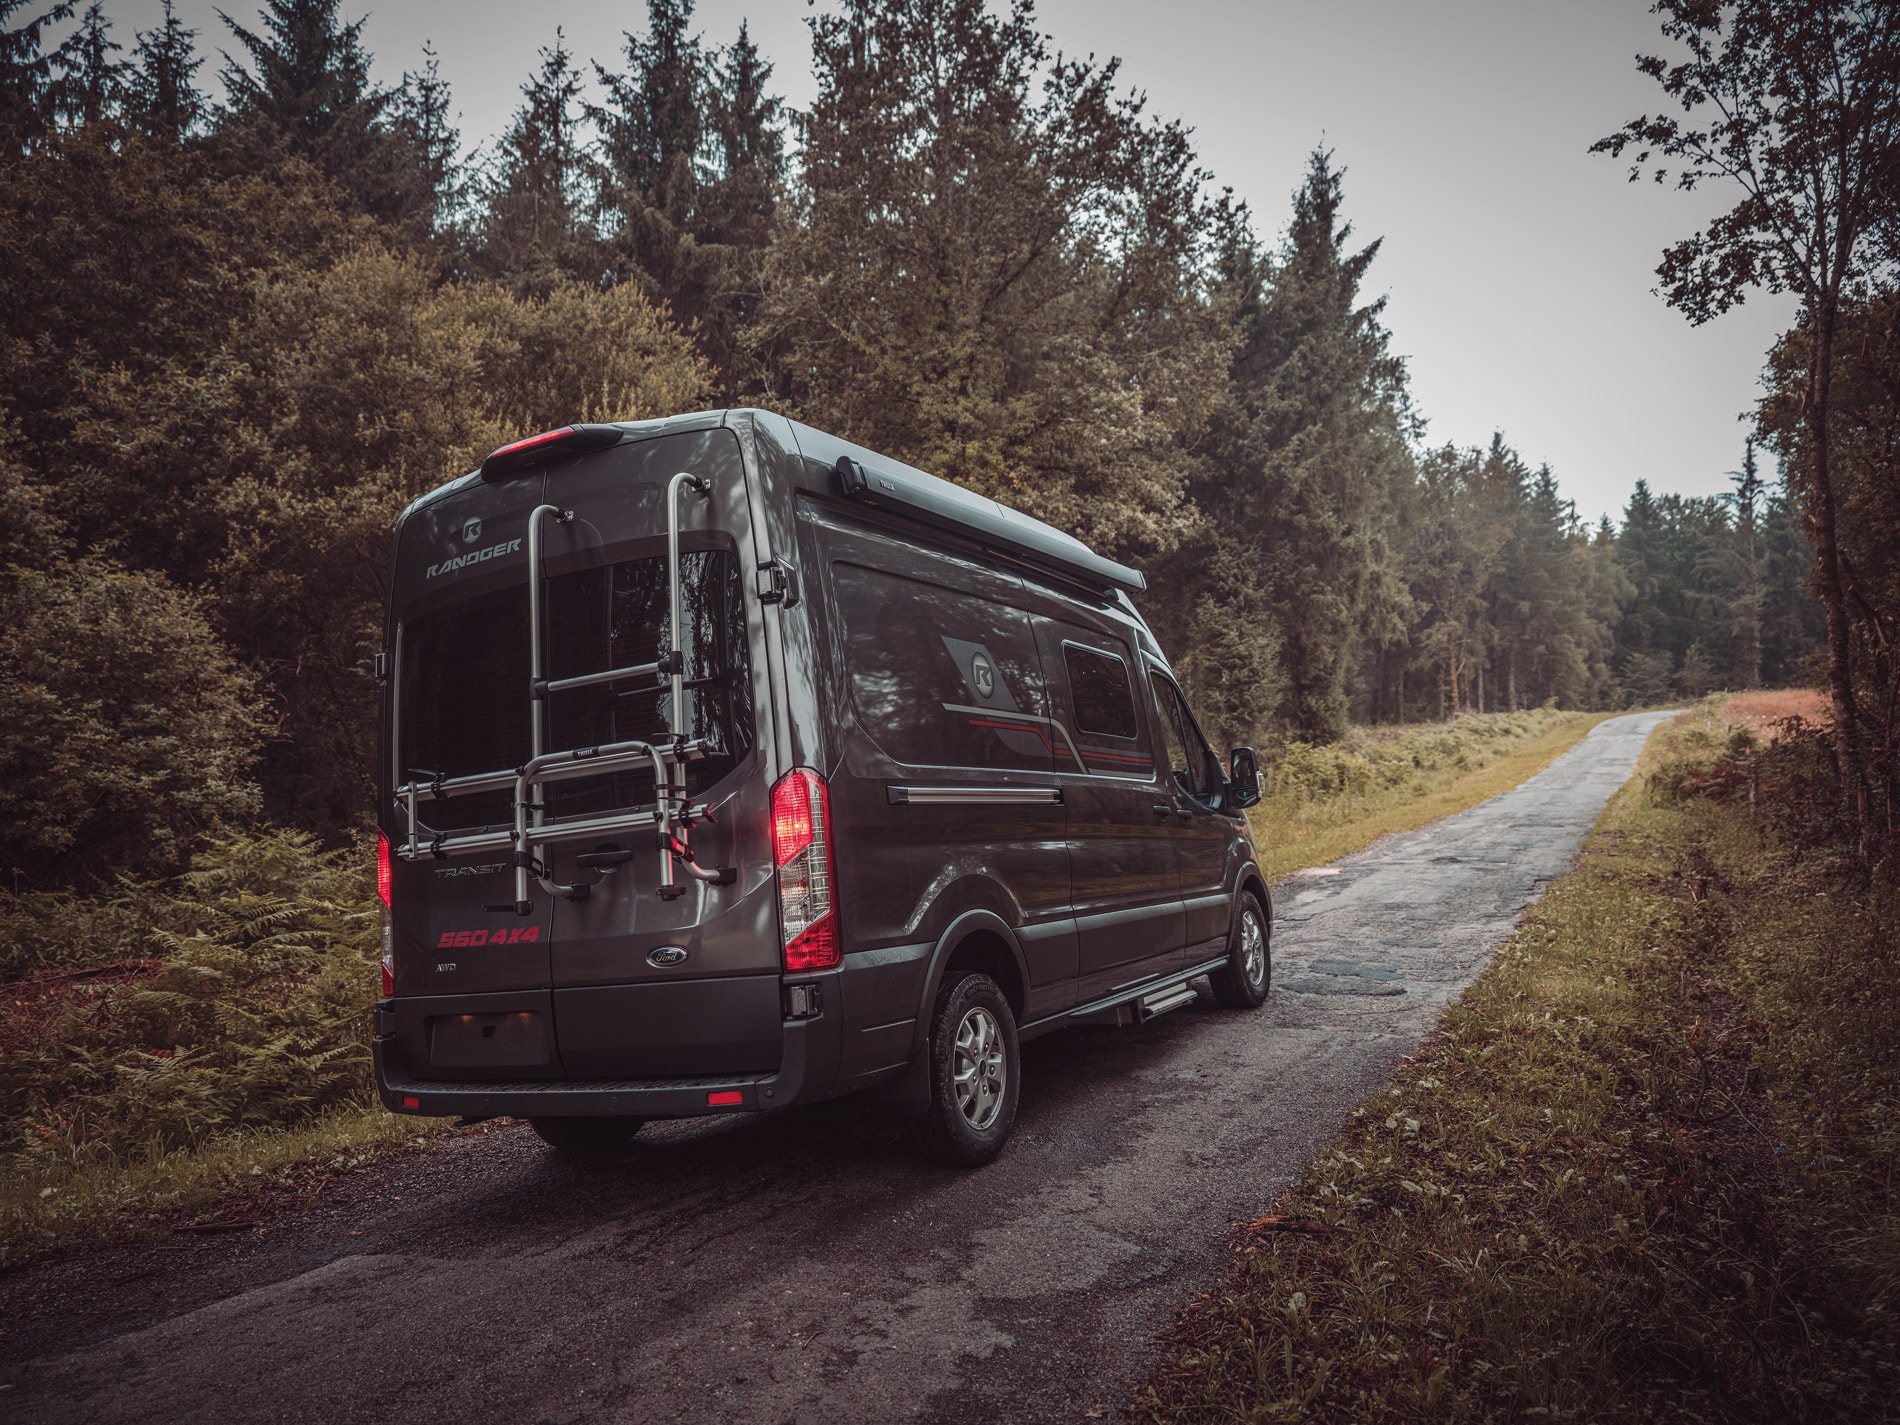 Randger 560 Luxury Campervan Adventure Awaits with All-Terrain Capabilities